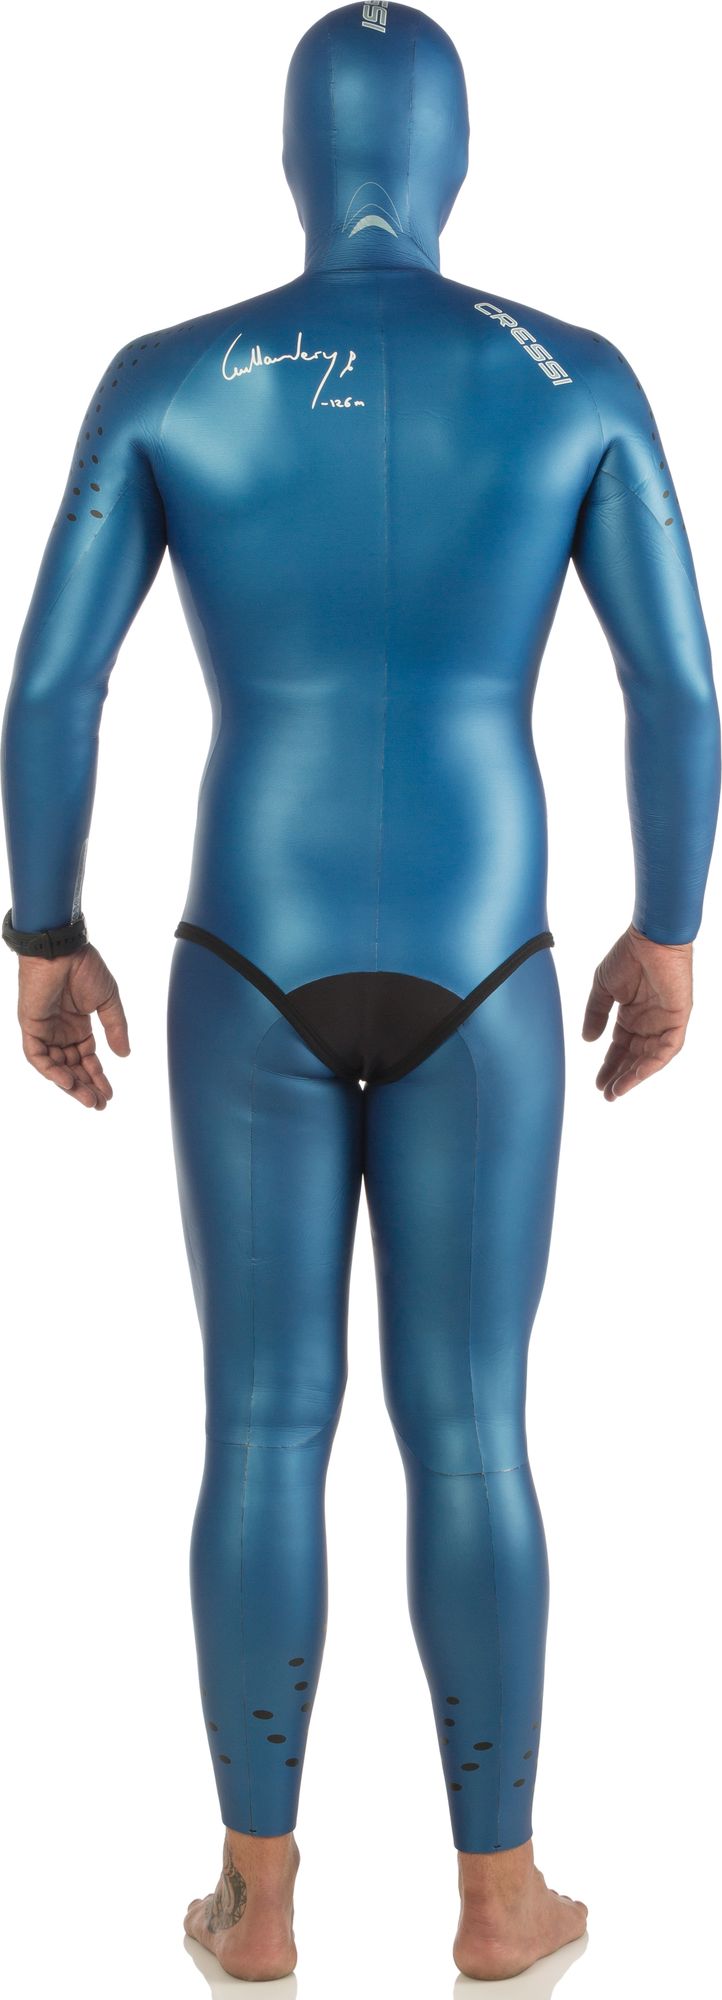 Cressi Free Wetsuit Man muta uomo apnea muta mute umid due pezz freediving neoprene wetsuit long sleeve two-pieces man